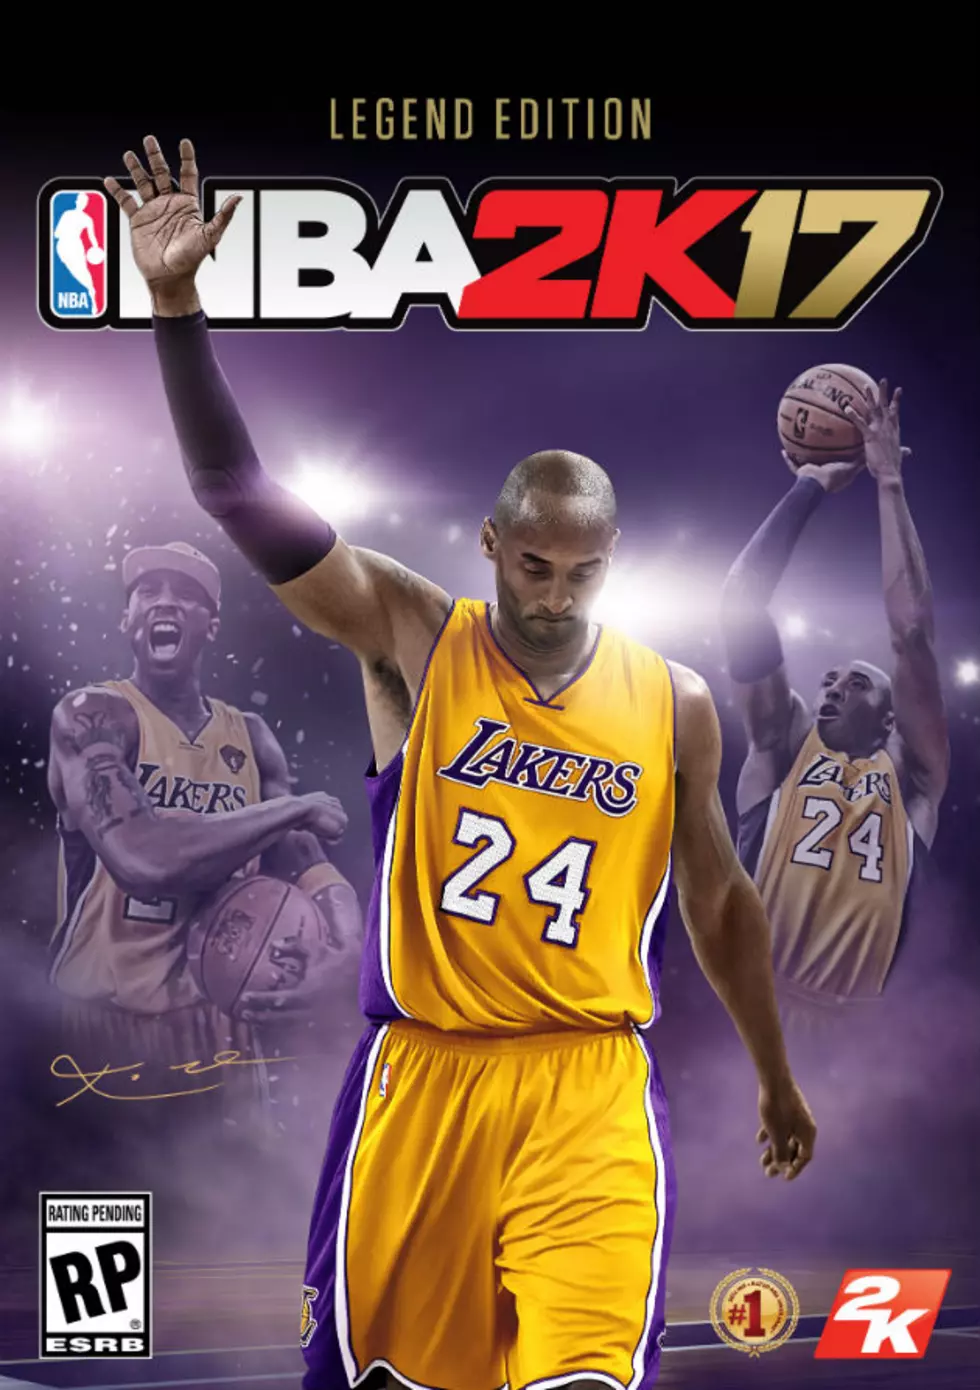 Kobe Bryant’s Legacy Lives On In NBA 2K17 Legend Edition